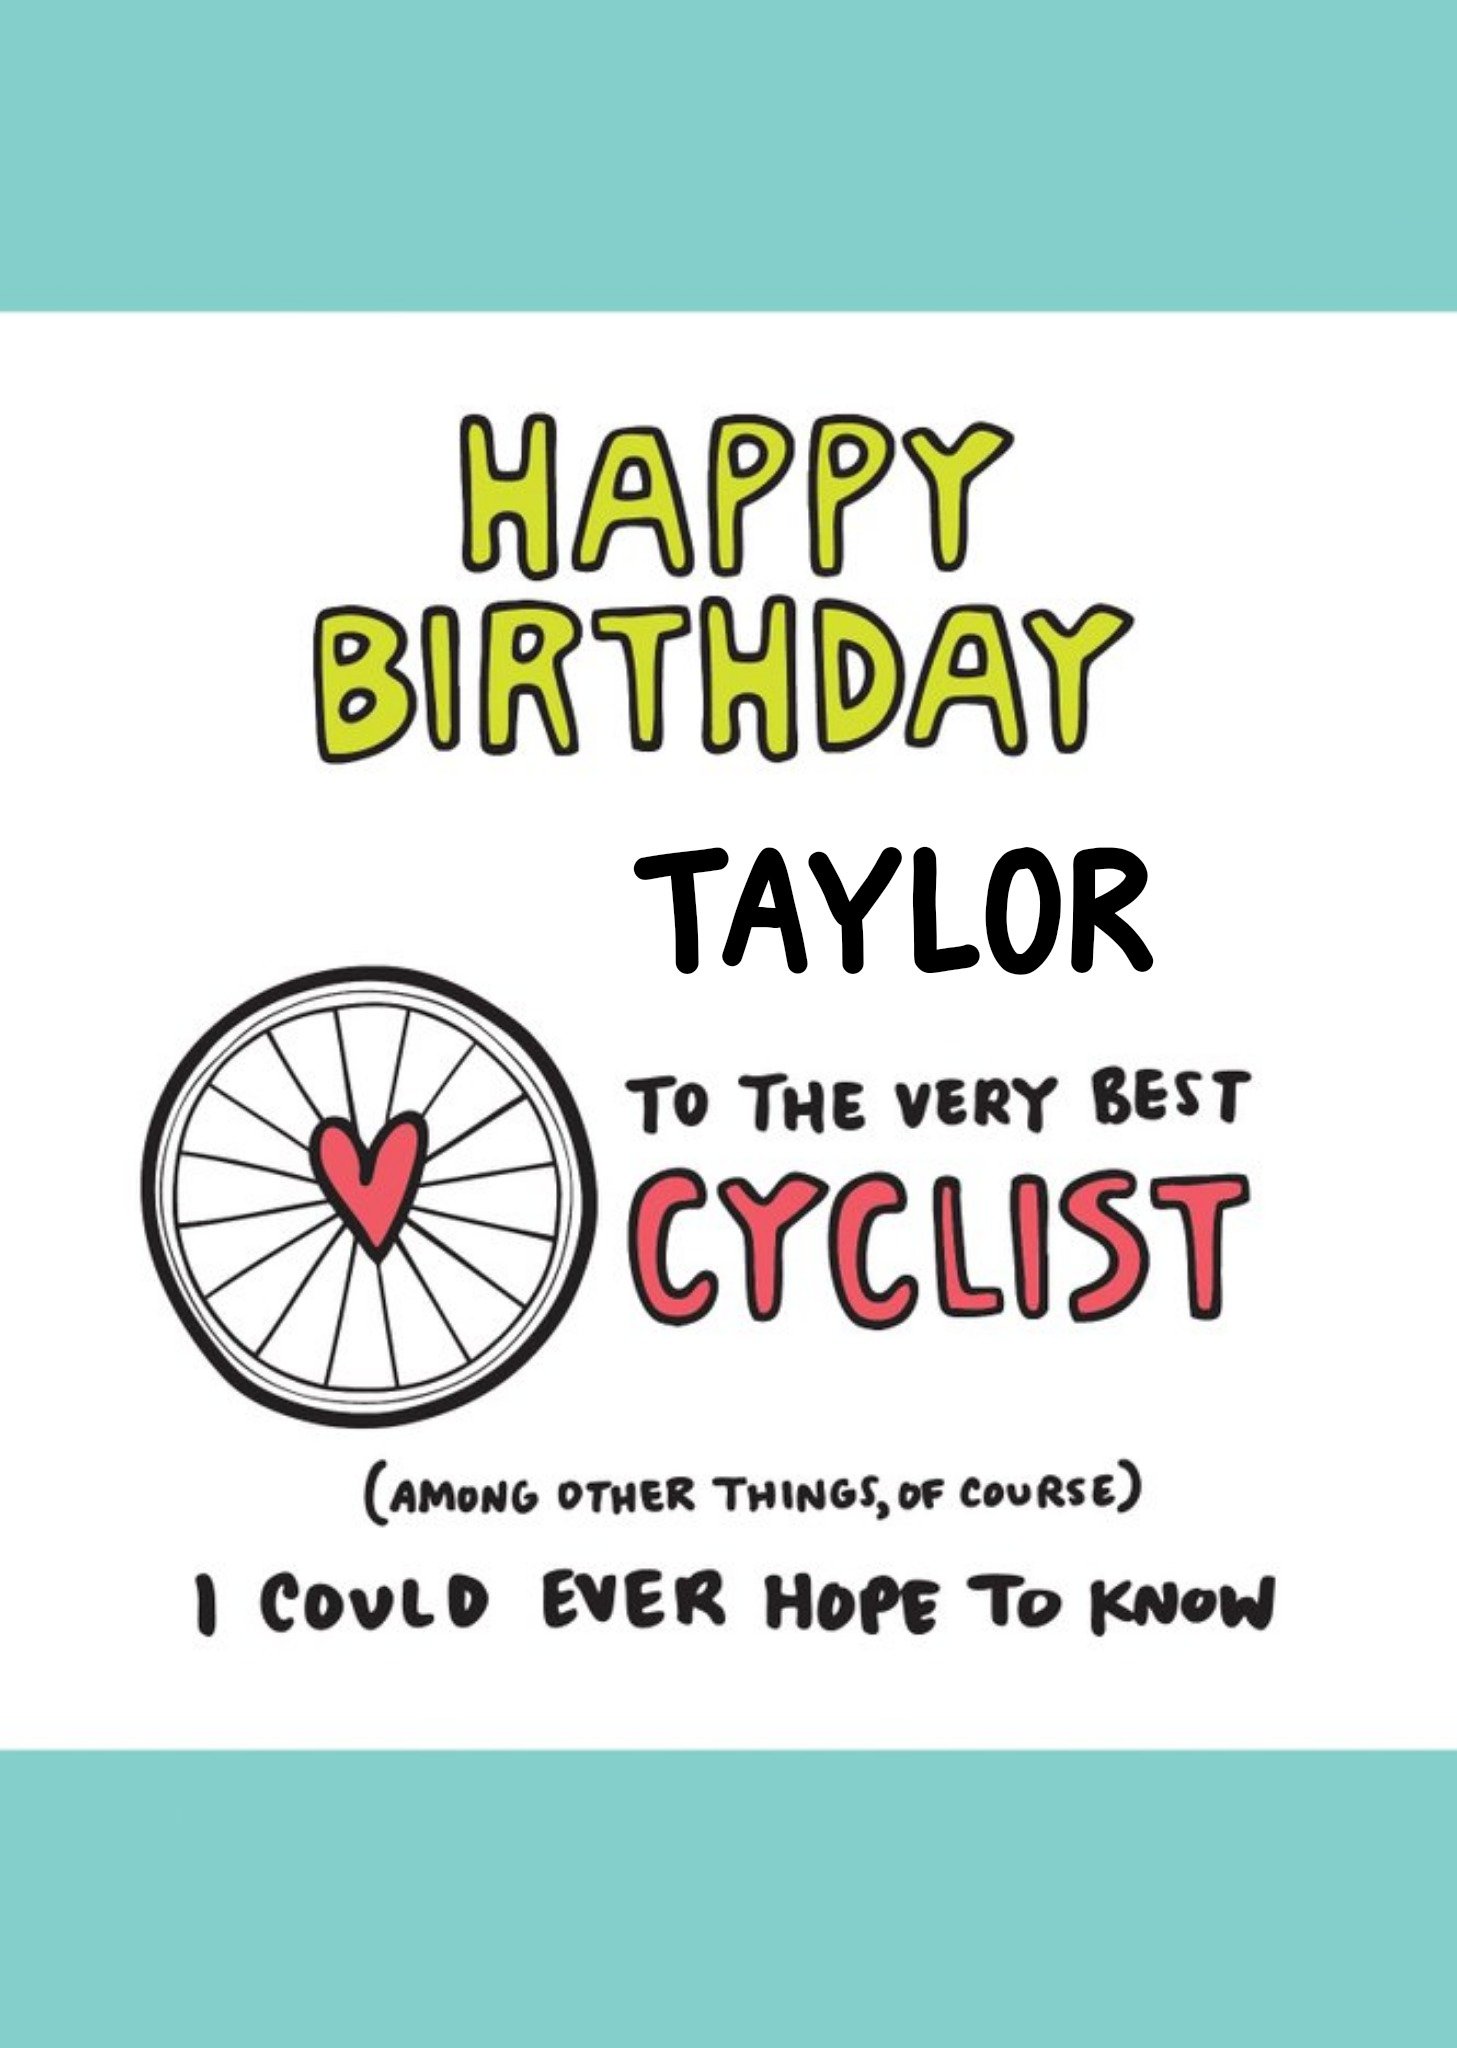 Moonpig Very Best Cyclist Birthday Card, Large